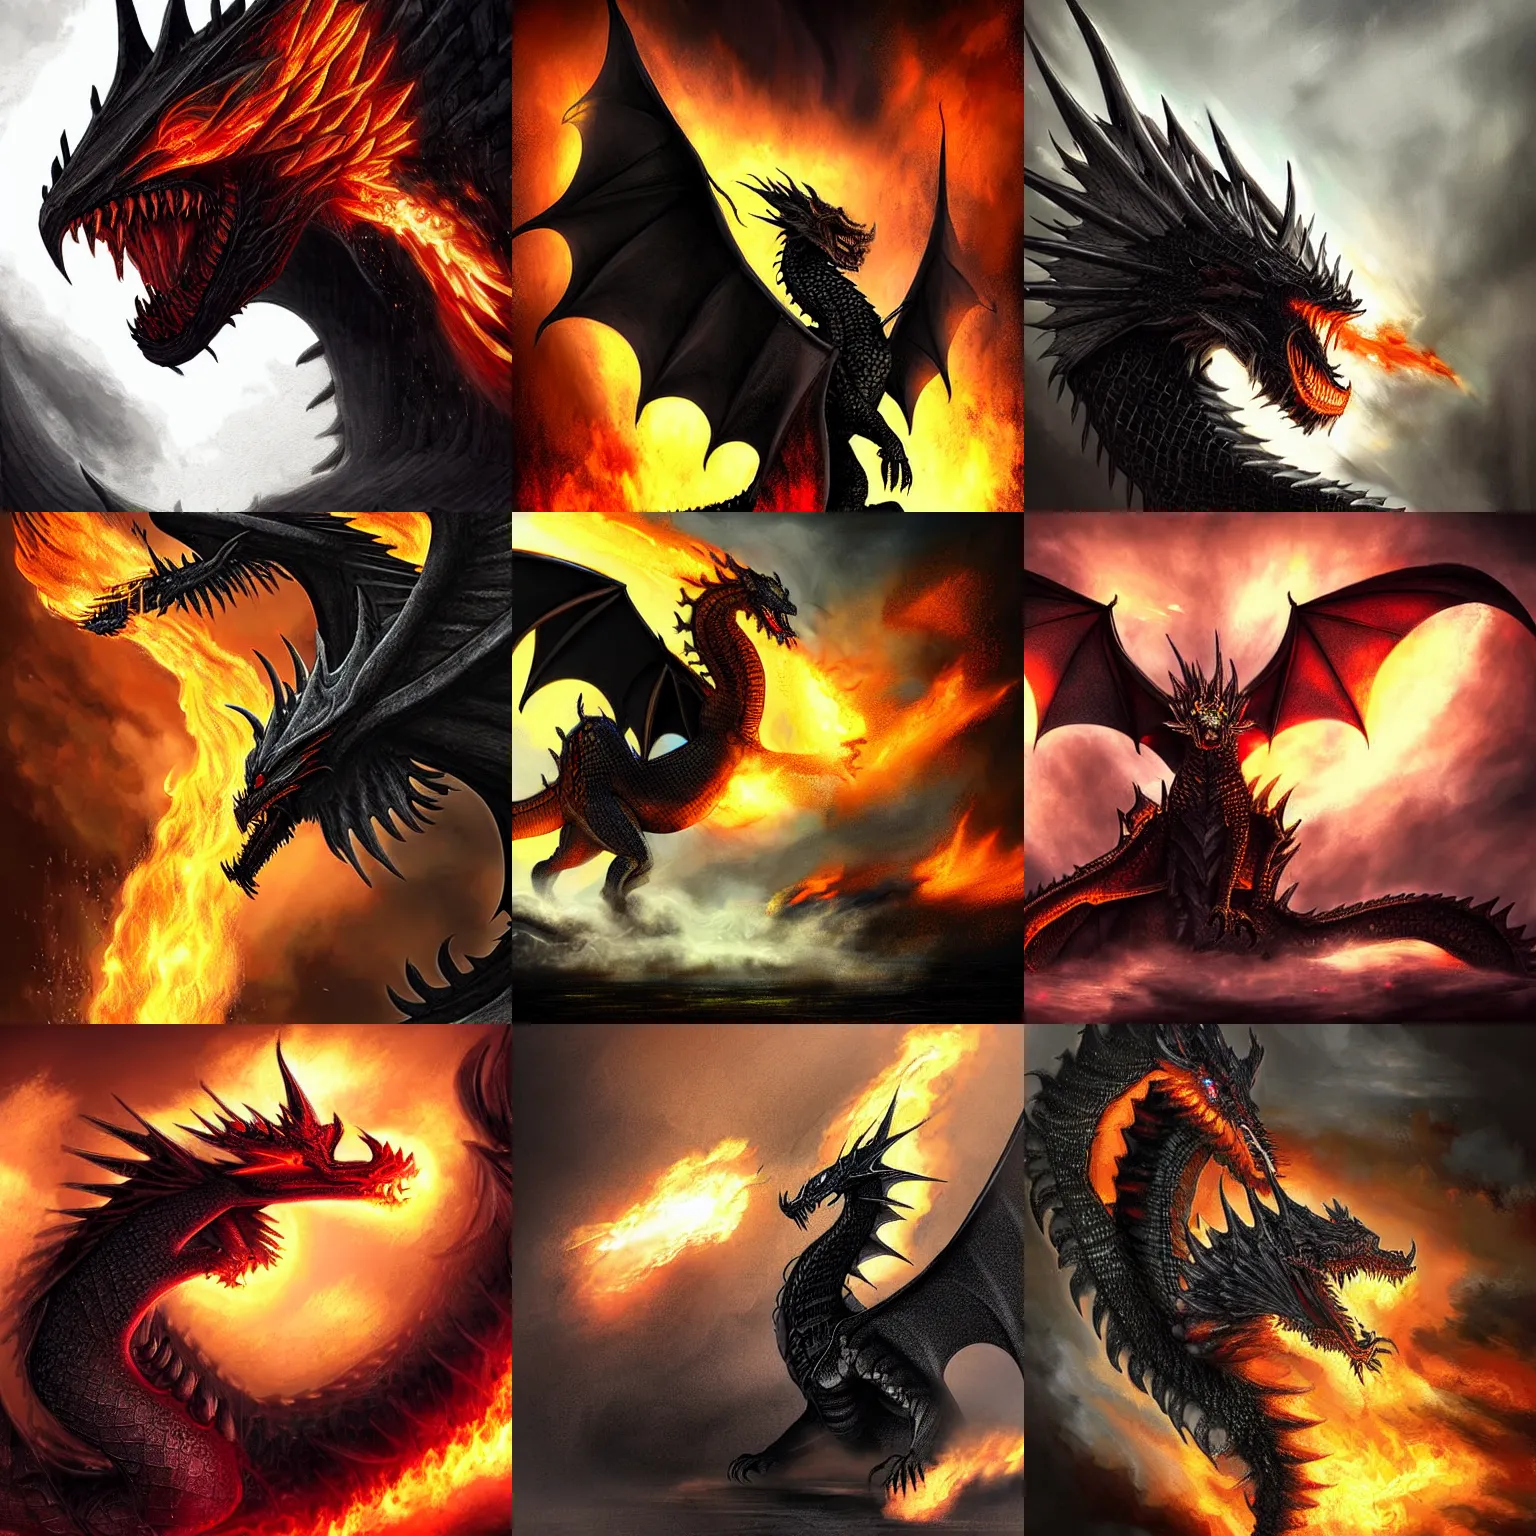 Prompt: black dragon breathing fire, outstanding, epic, amazing, digital art, fantasy art